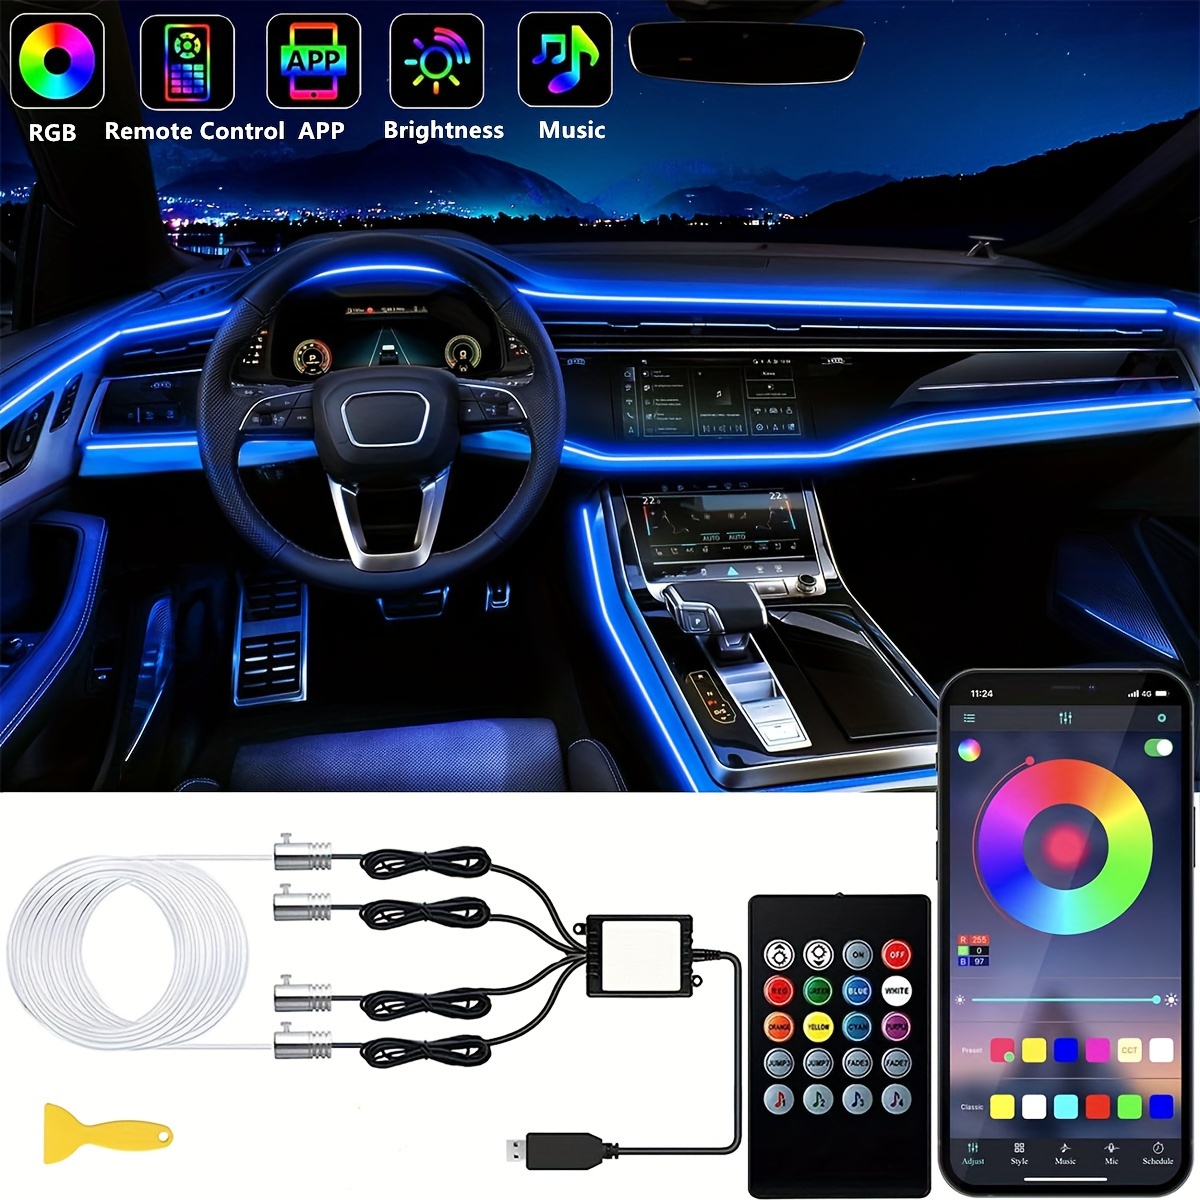  Qasim Tira LED secuencial, tira de luces LED flexibles de 12  pulgadas para coche, intermitente, intermitente, luz de circulación diurna  blanca/ámbar para retroadaptación de faros delanteros, 1 par : Automotriz